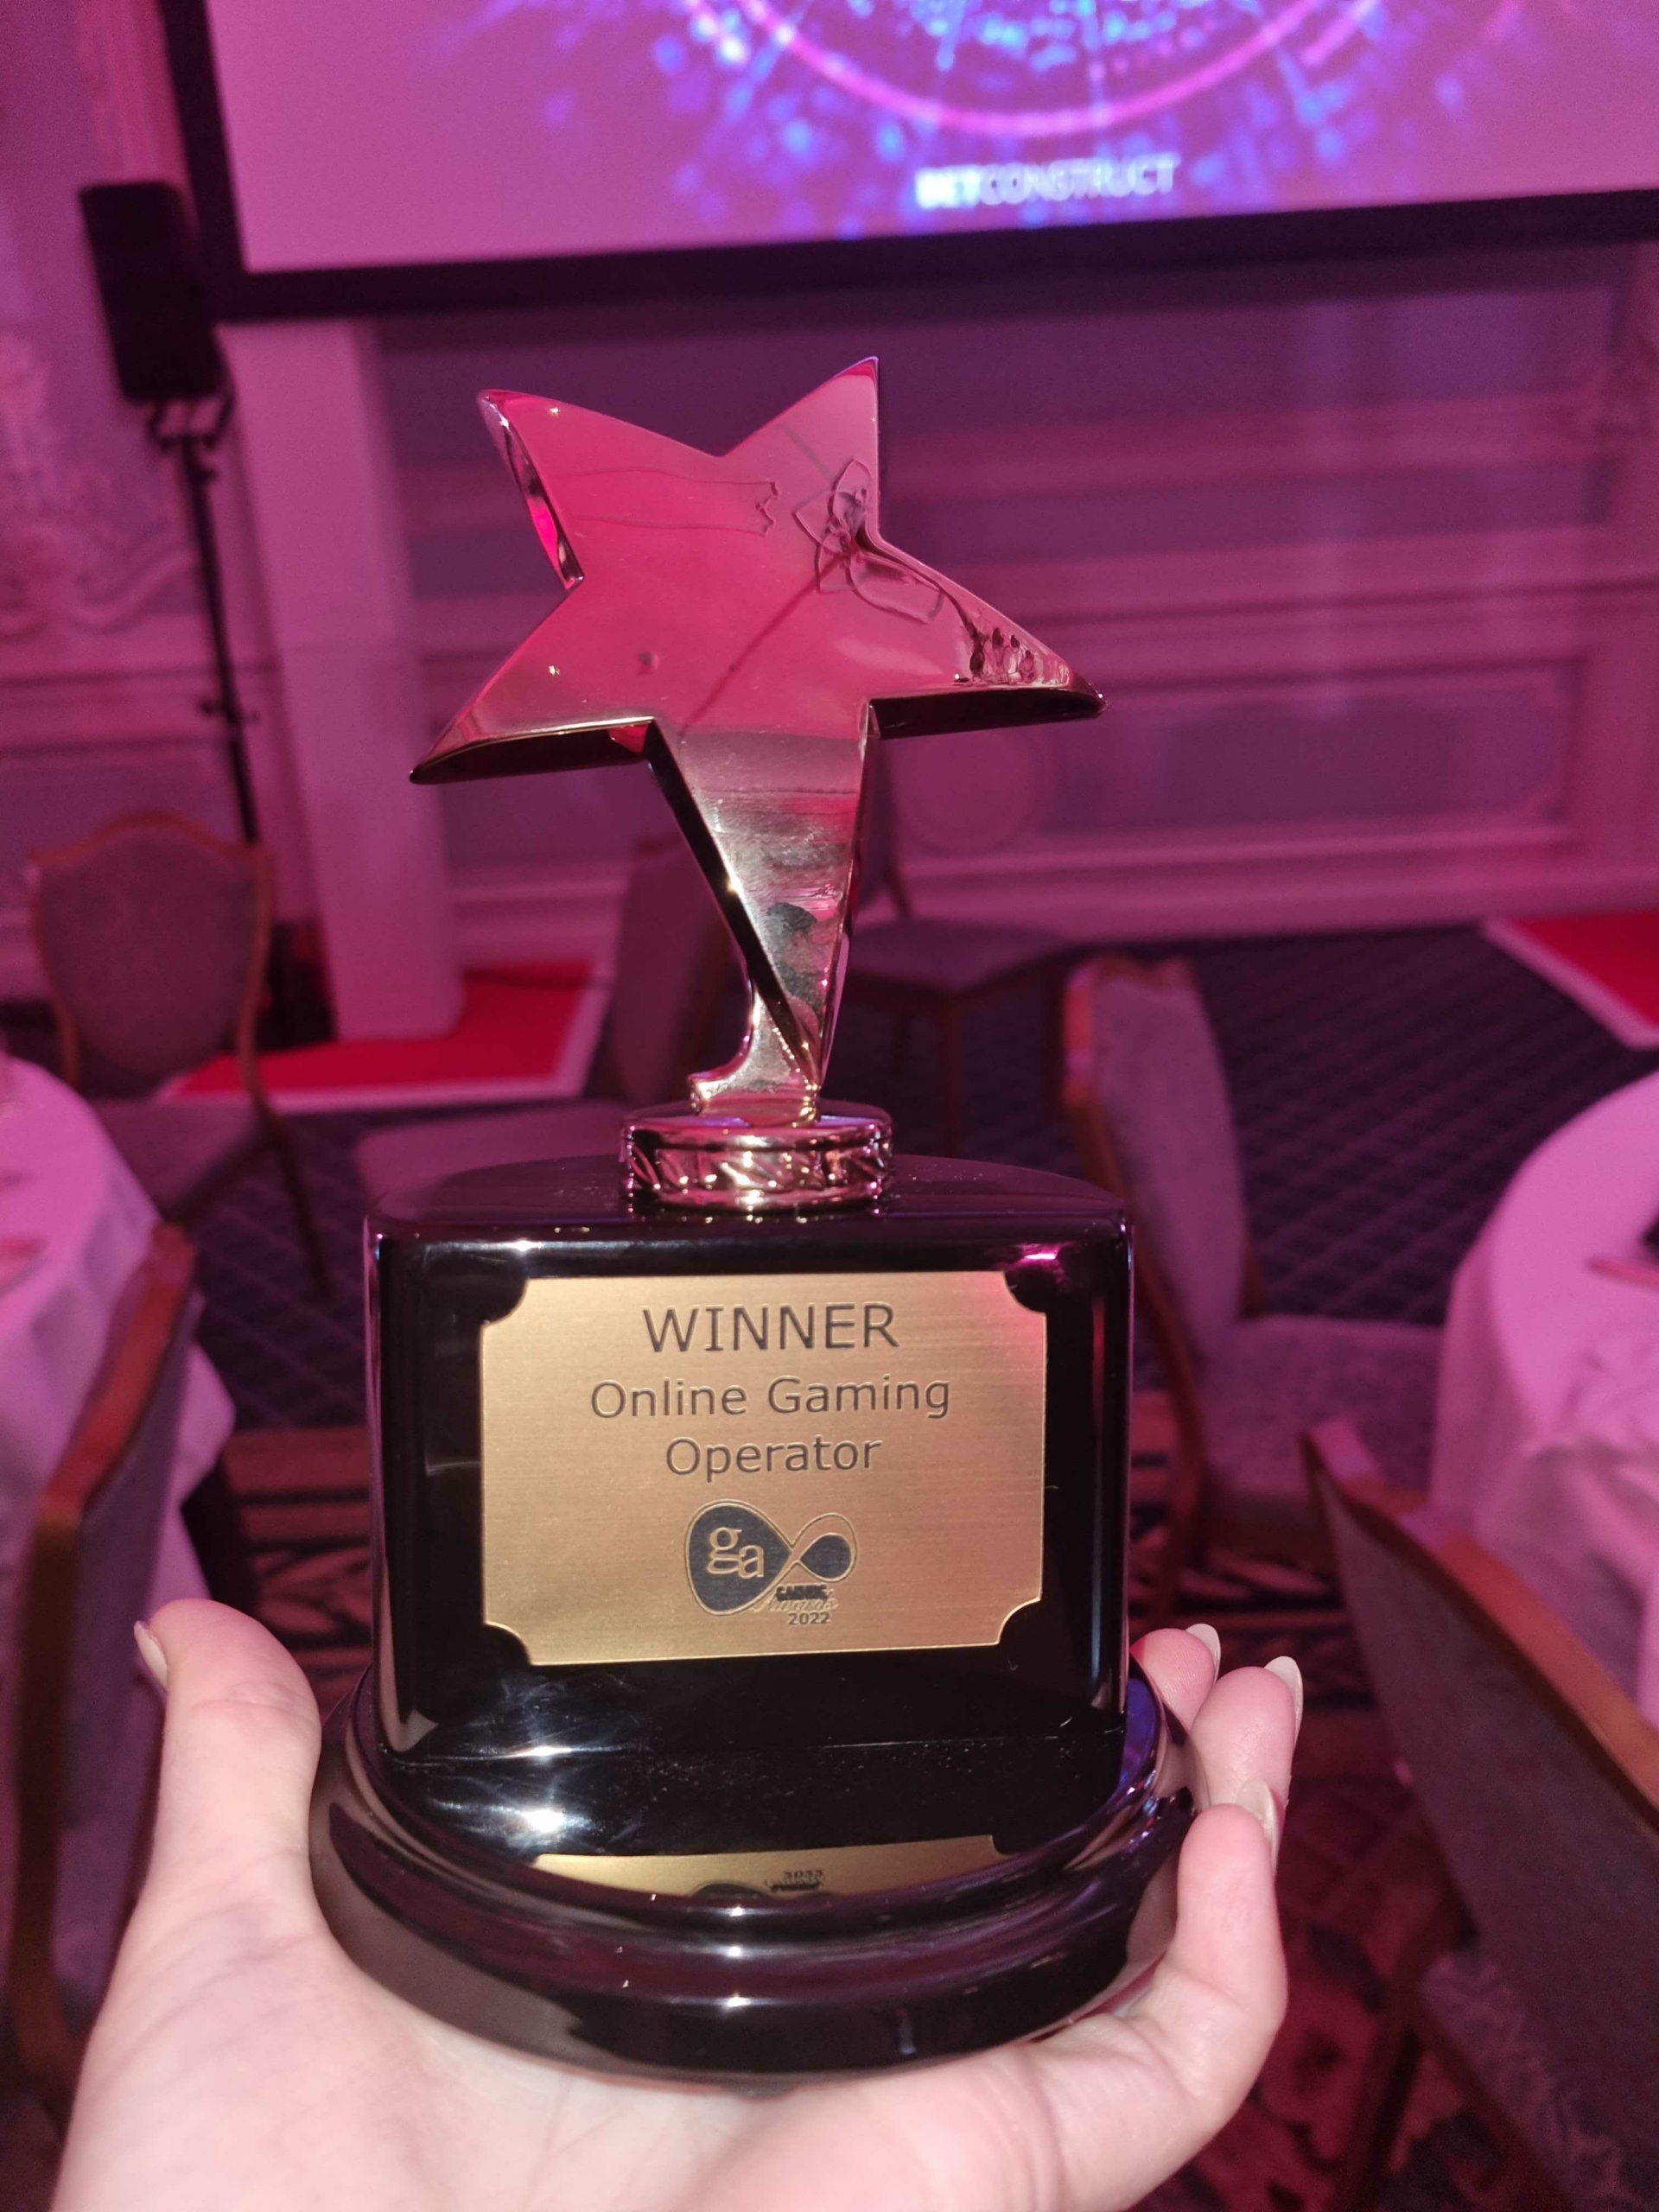 LeoVegas wins second consecutive “Online Gaming Operator” award at prestigious 2022 International Gaming Awards